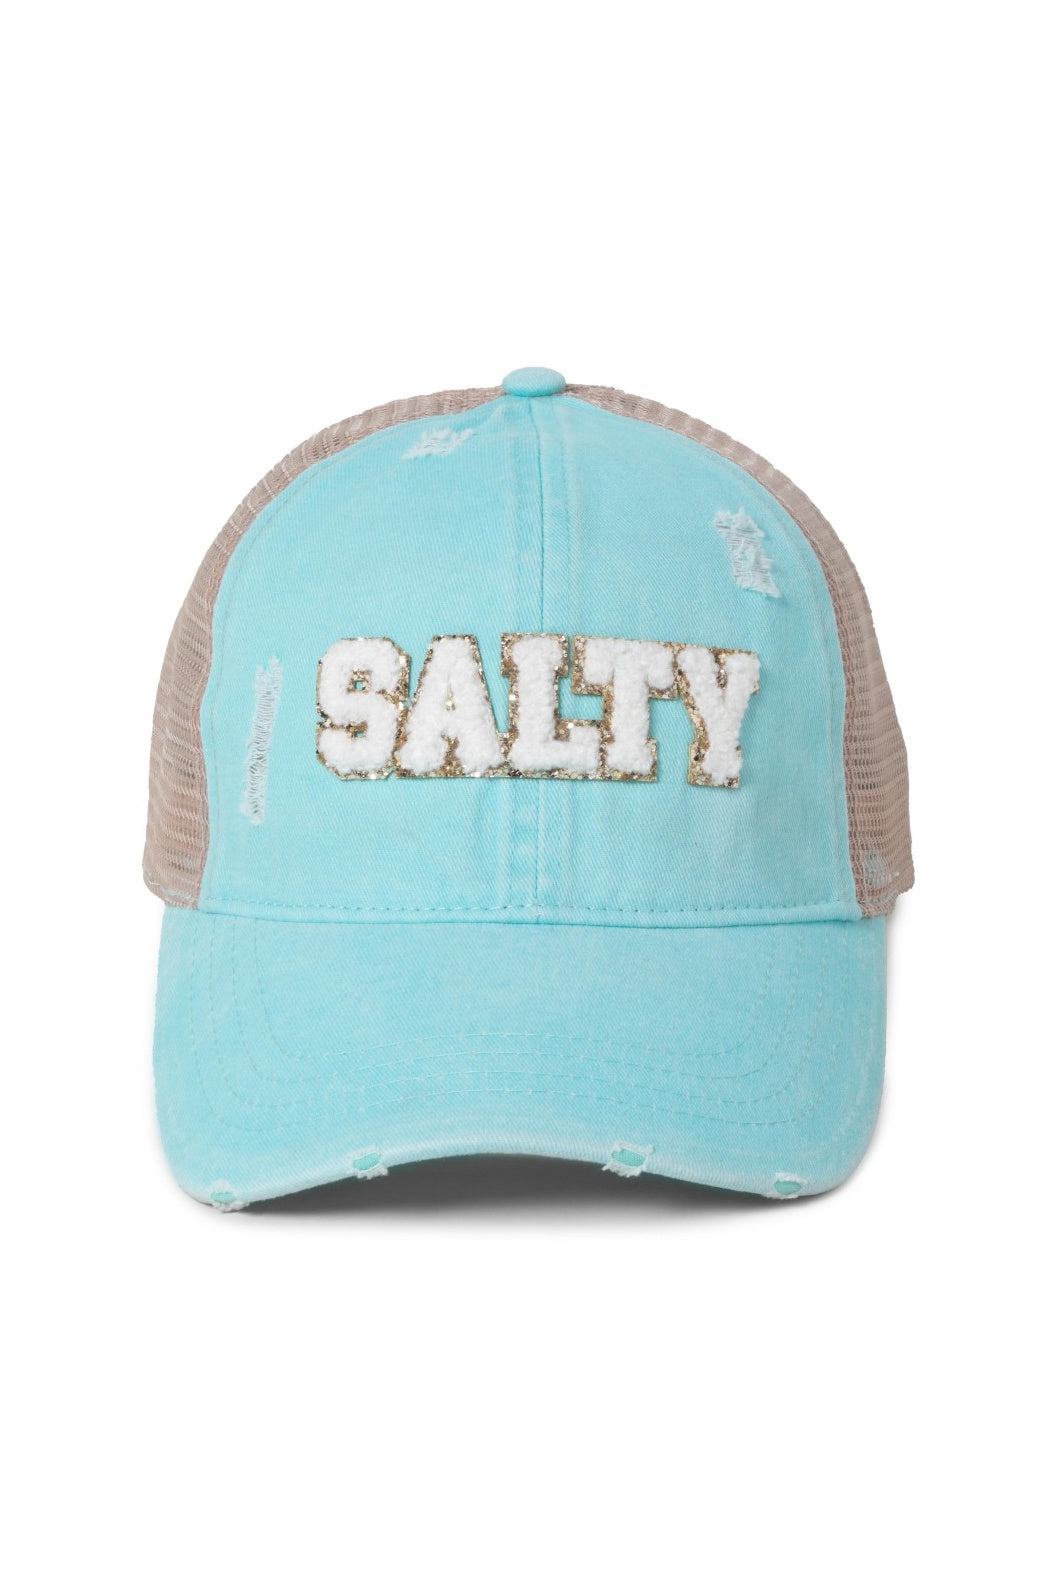 Distressed Chenille Glitz Salty Trucker Cap